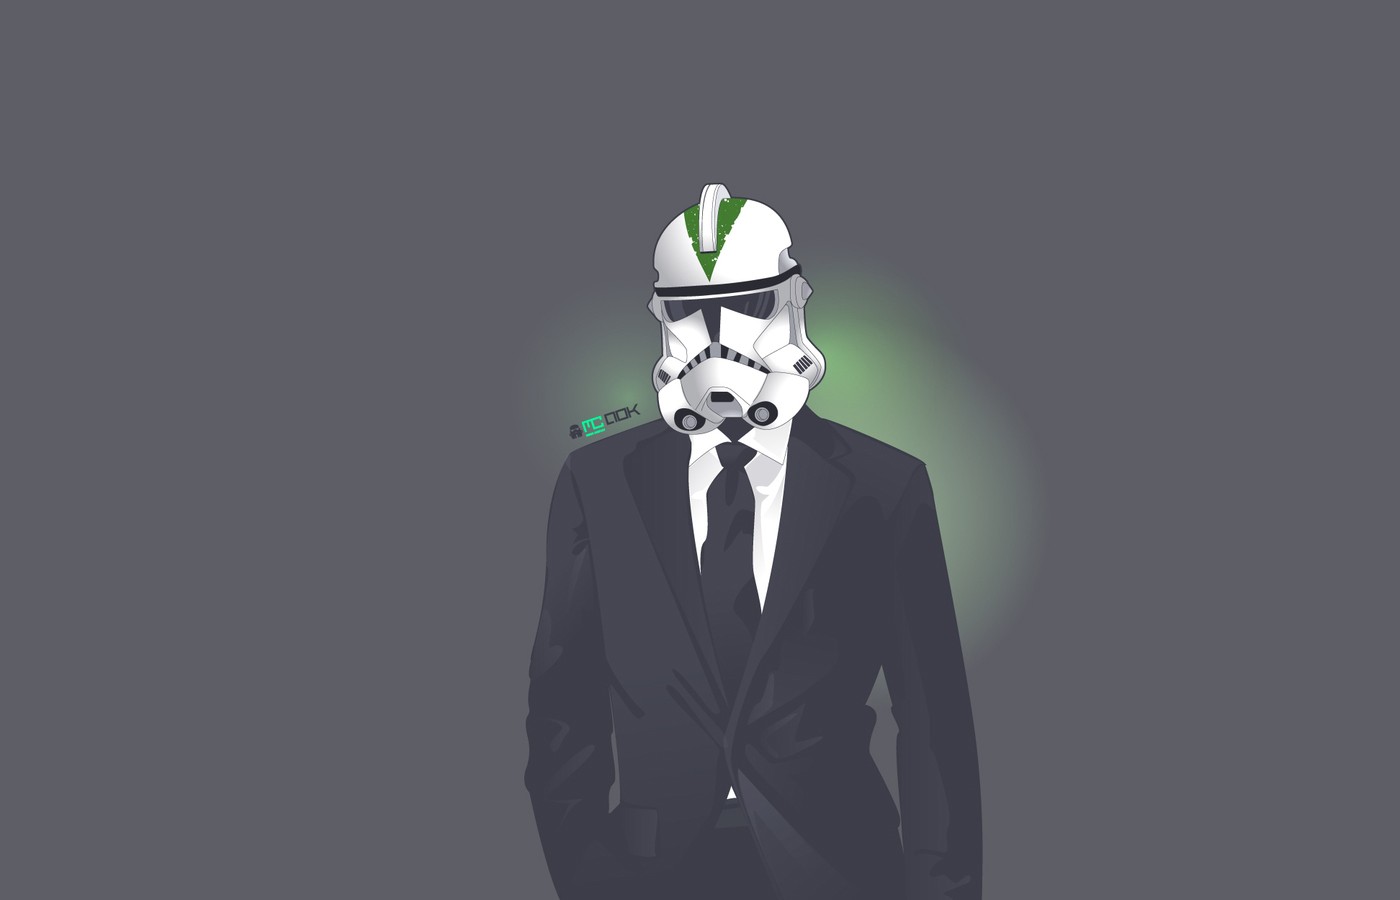 General 1400x900 Star Wars artwork helmet suits tie simple background gray background clone trooper